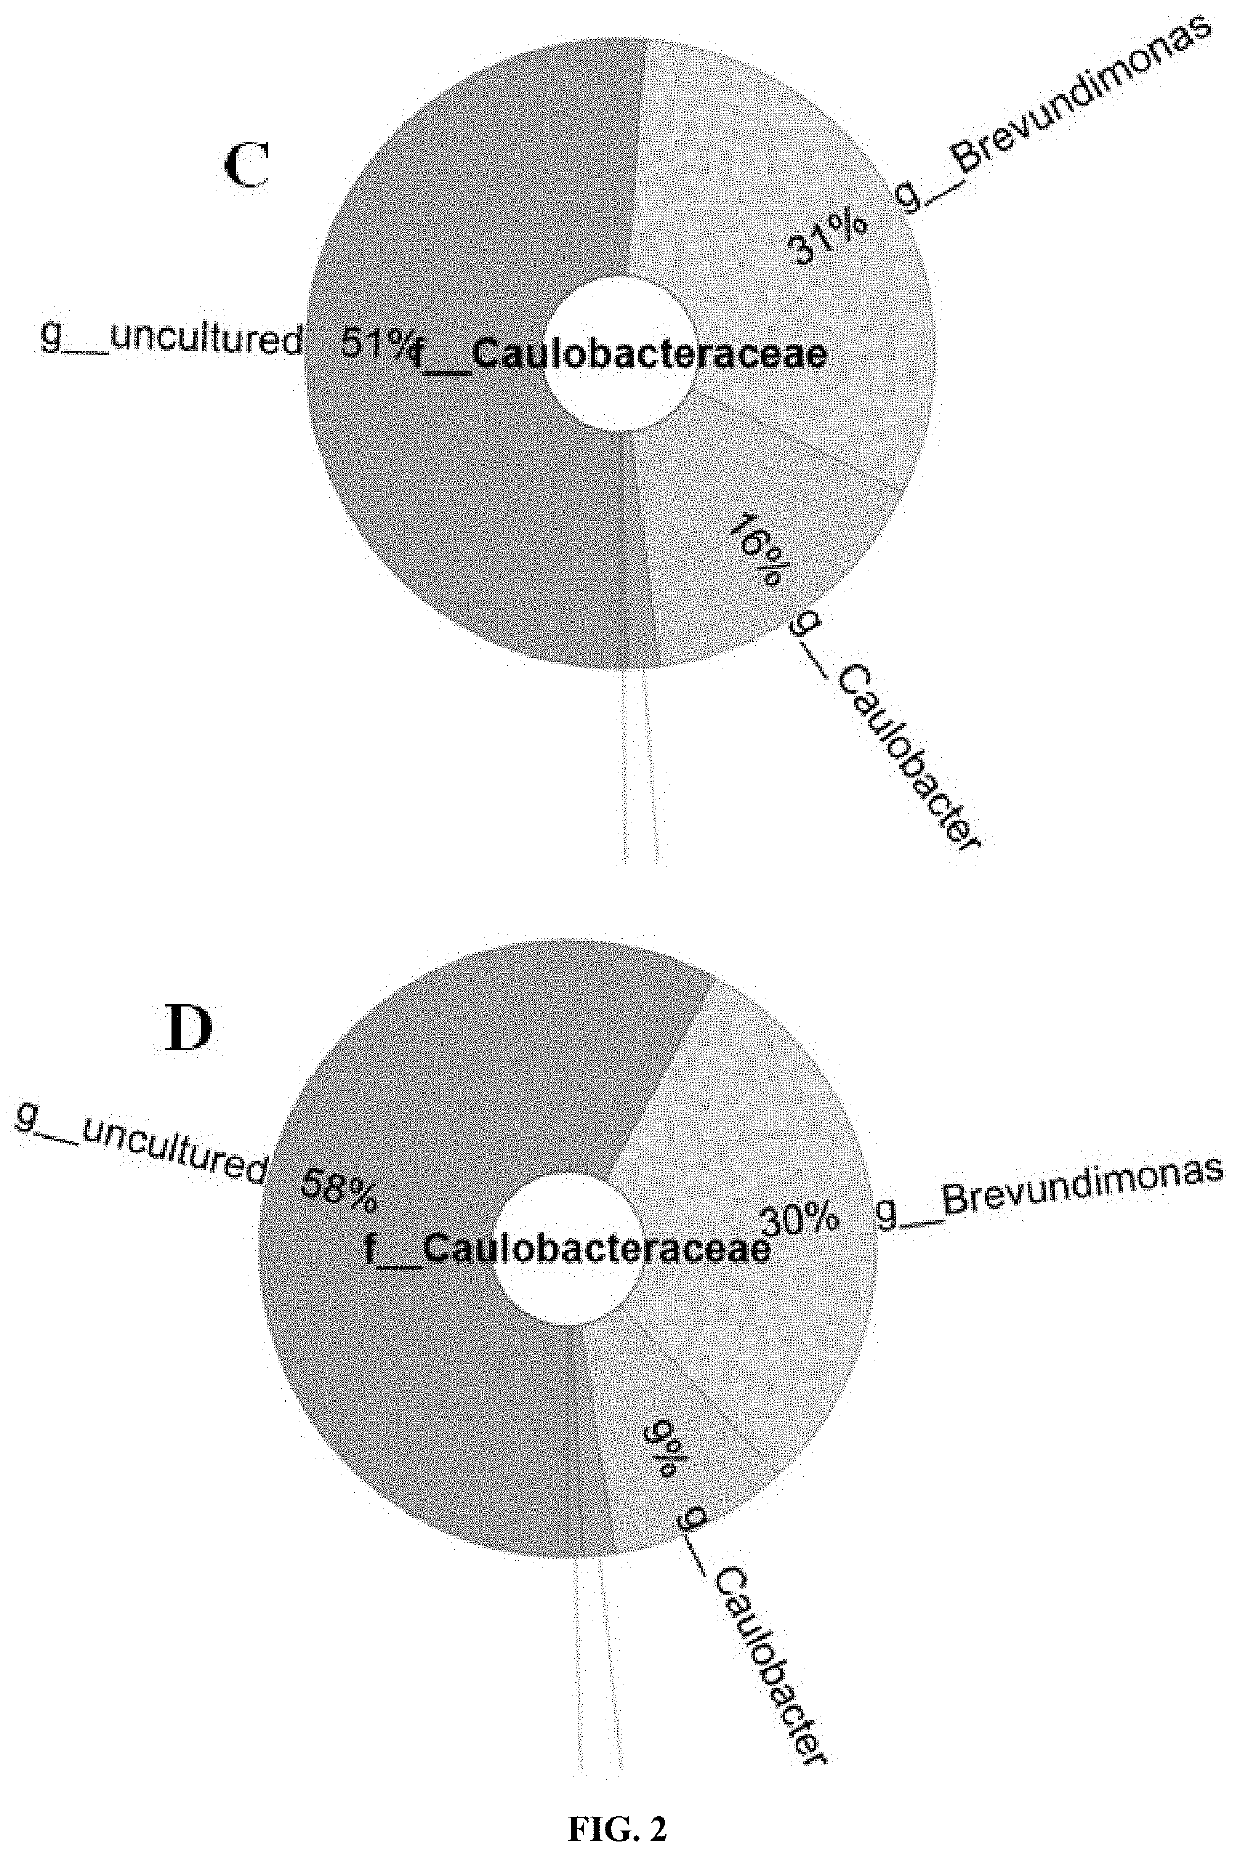 Brevundimonas strain as endosymbiont of verticillium dahliae and use thereof